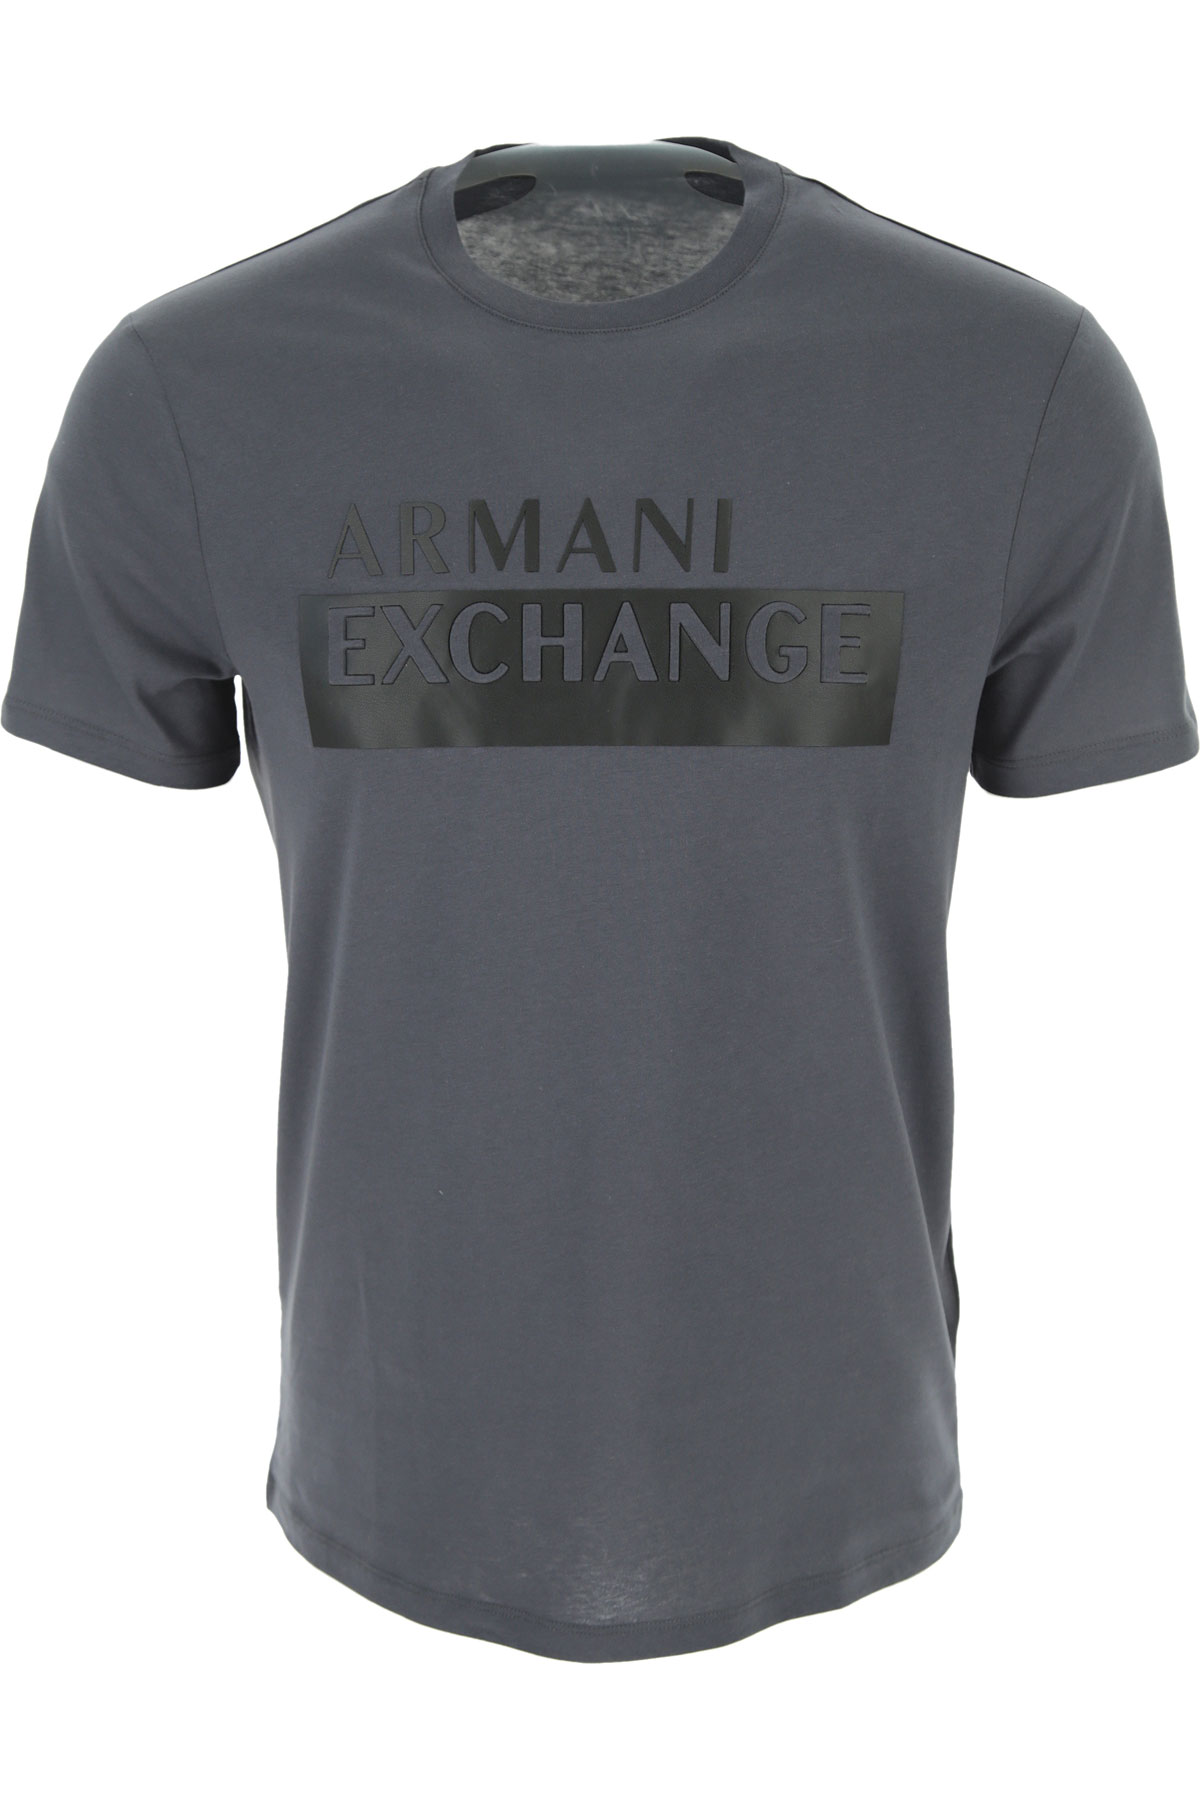 Mens Clothing Armani Exchange, Style code: 6lztbe-zjgcz-1978